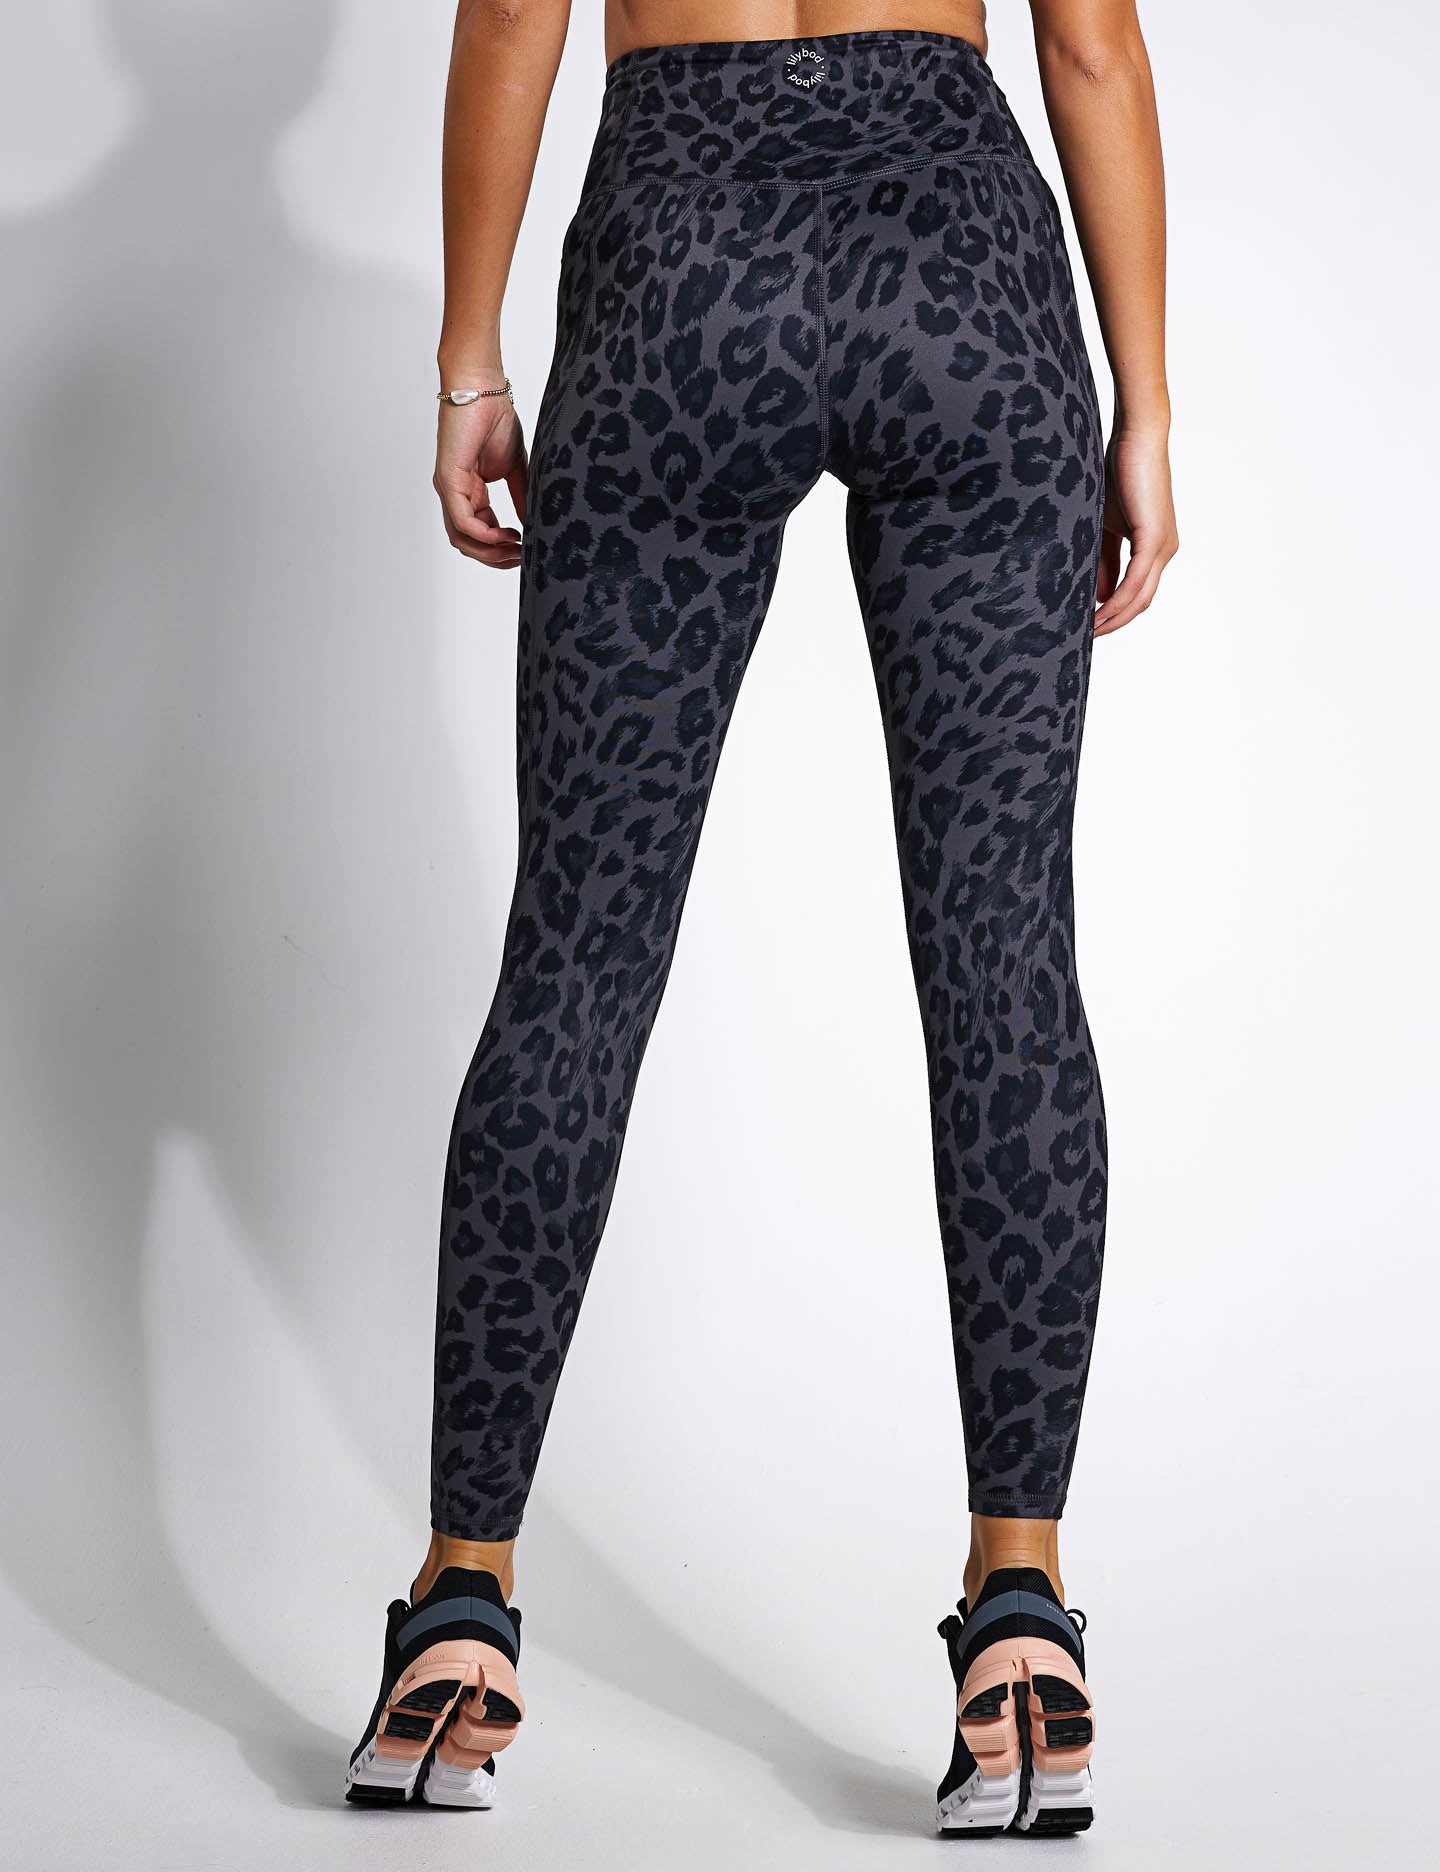 Lou & Grey Leopard Animal Print Leggings Size Medium Vibrant